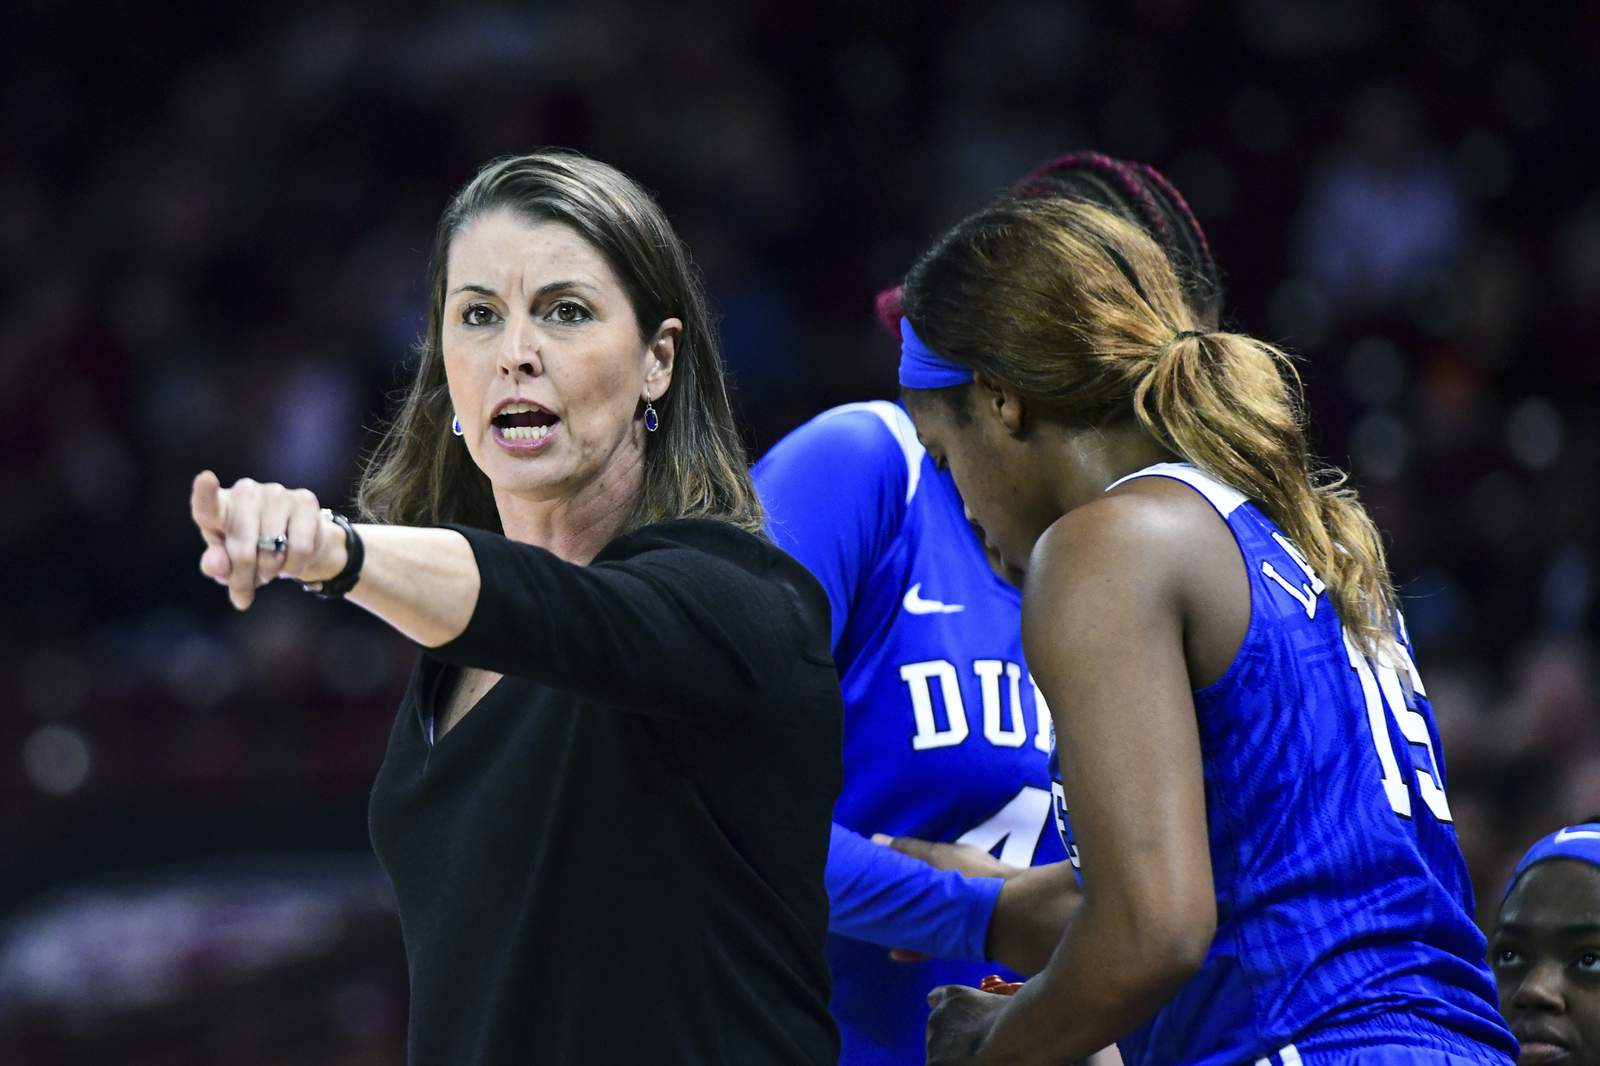 McCallie won't return as Duke's women's basketball coach